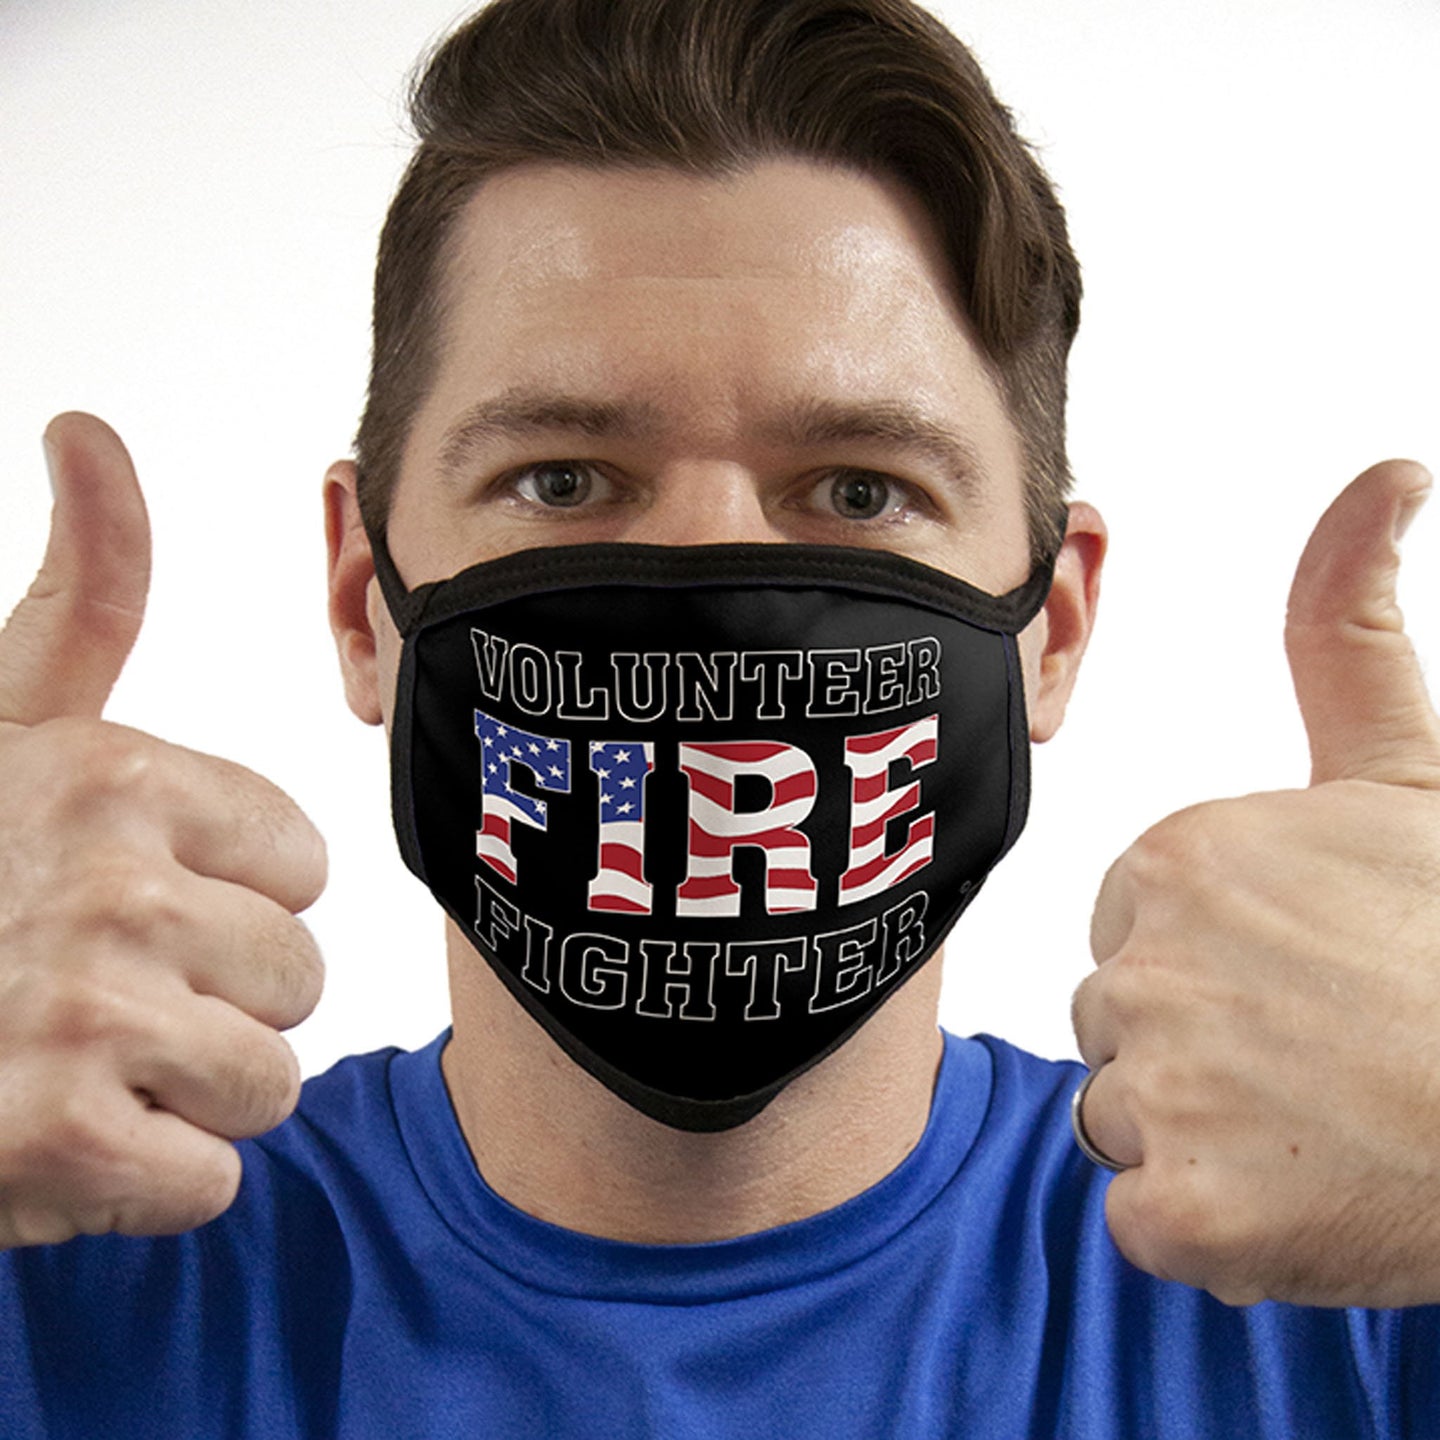 Volunteer Firefighter FACE MASK Cover Your Face Masks